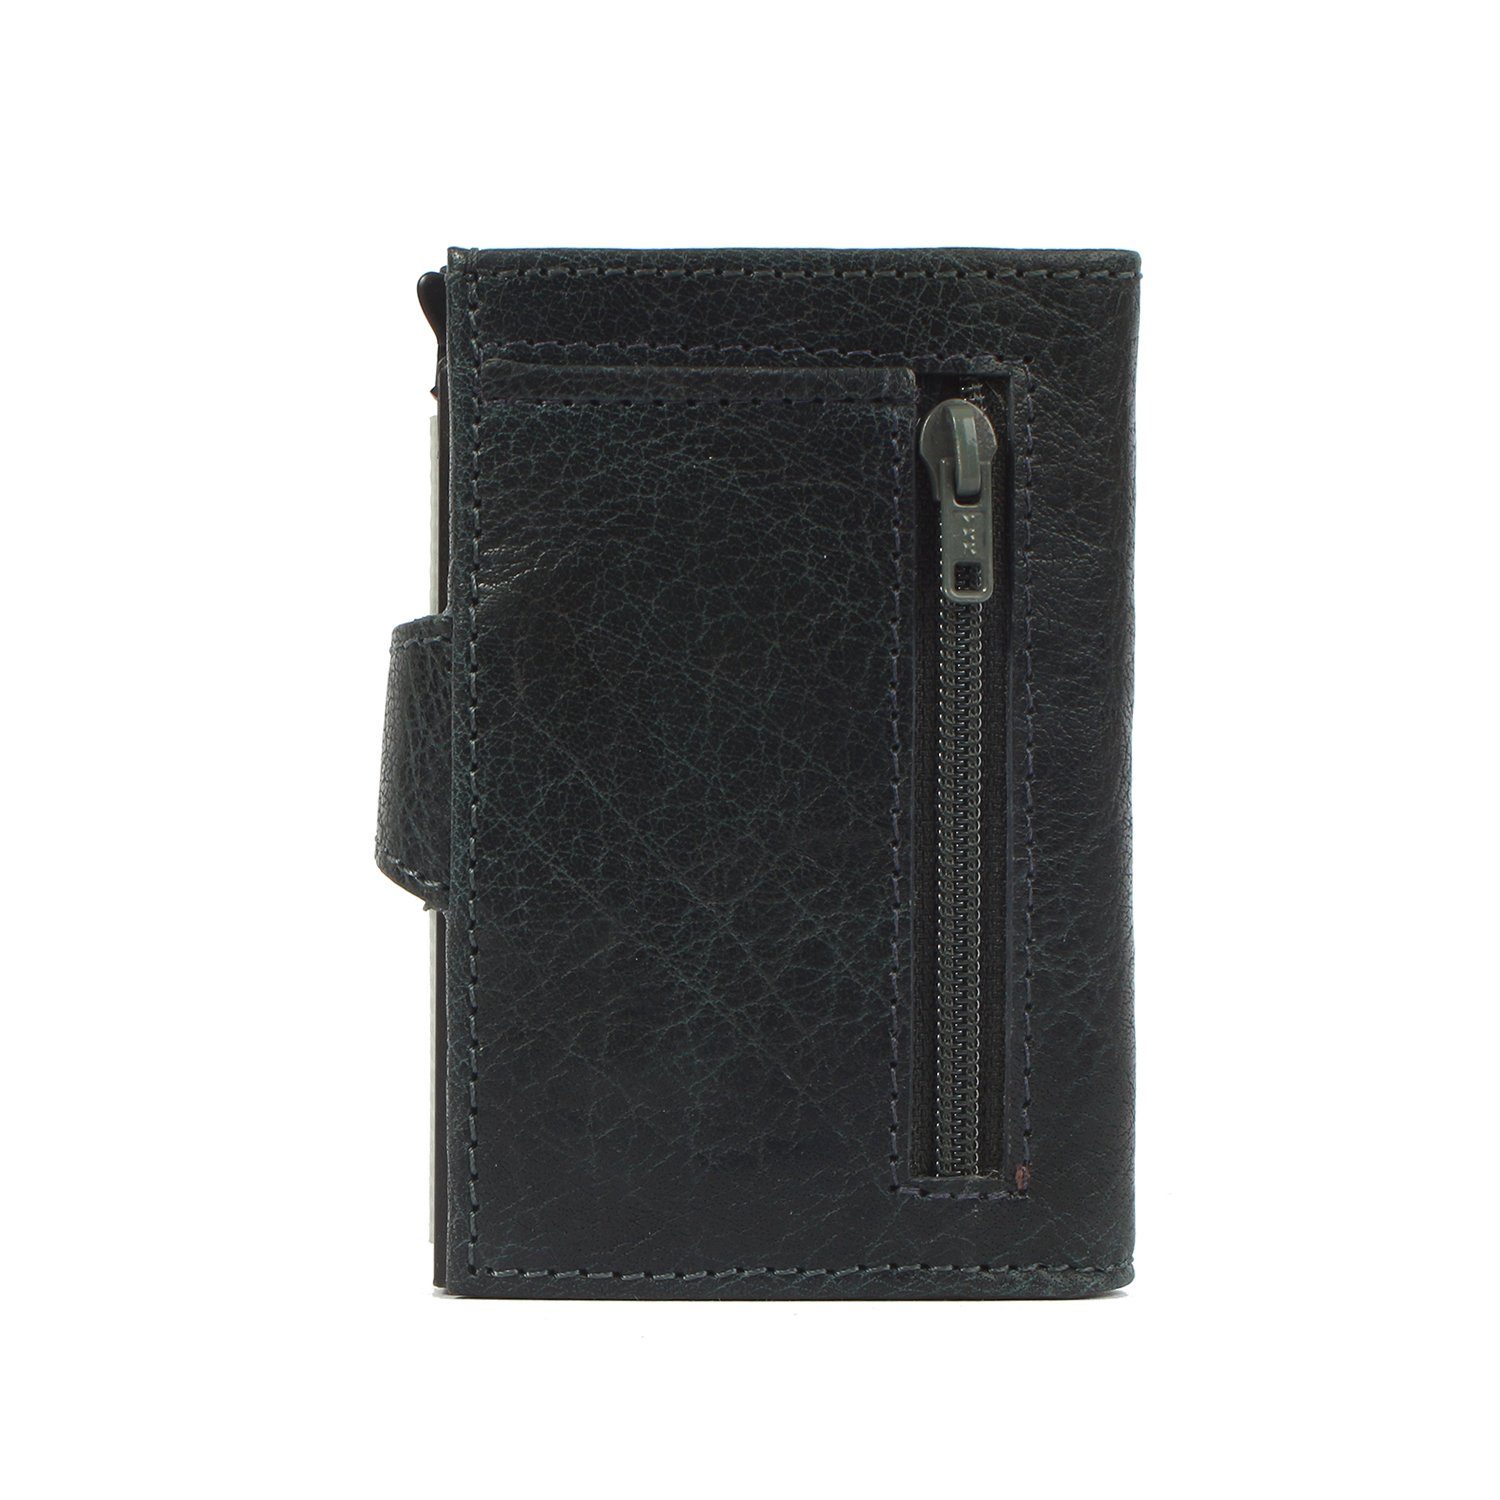 Upcycling noonyu Geldbörse Kreditkartenbörse Leder leather, Margelisch Mini aus steelblue single